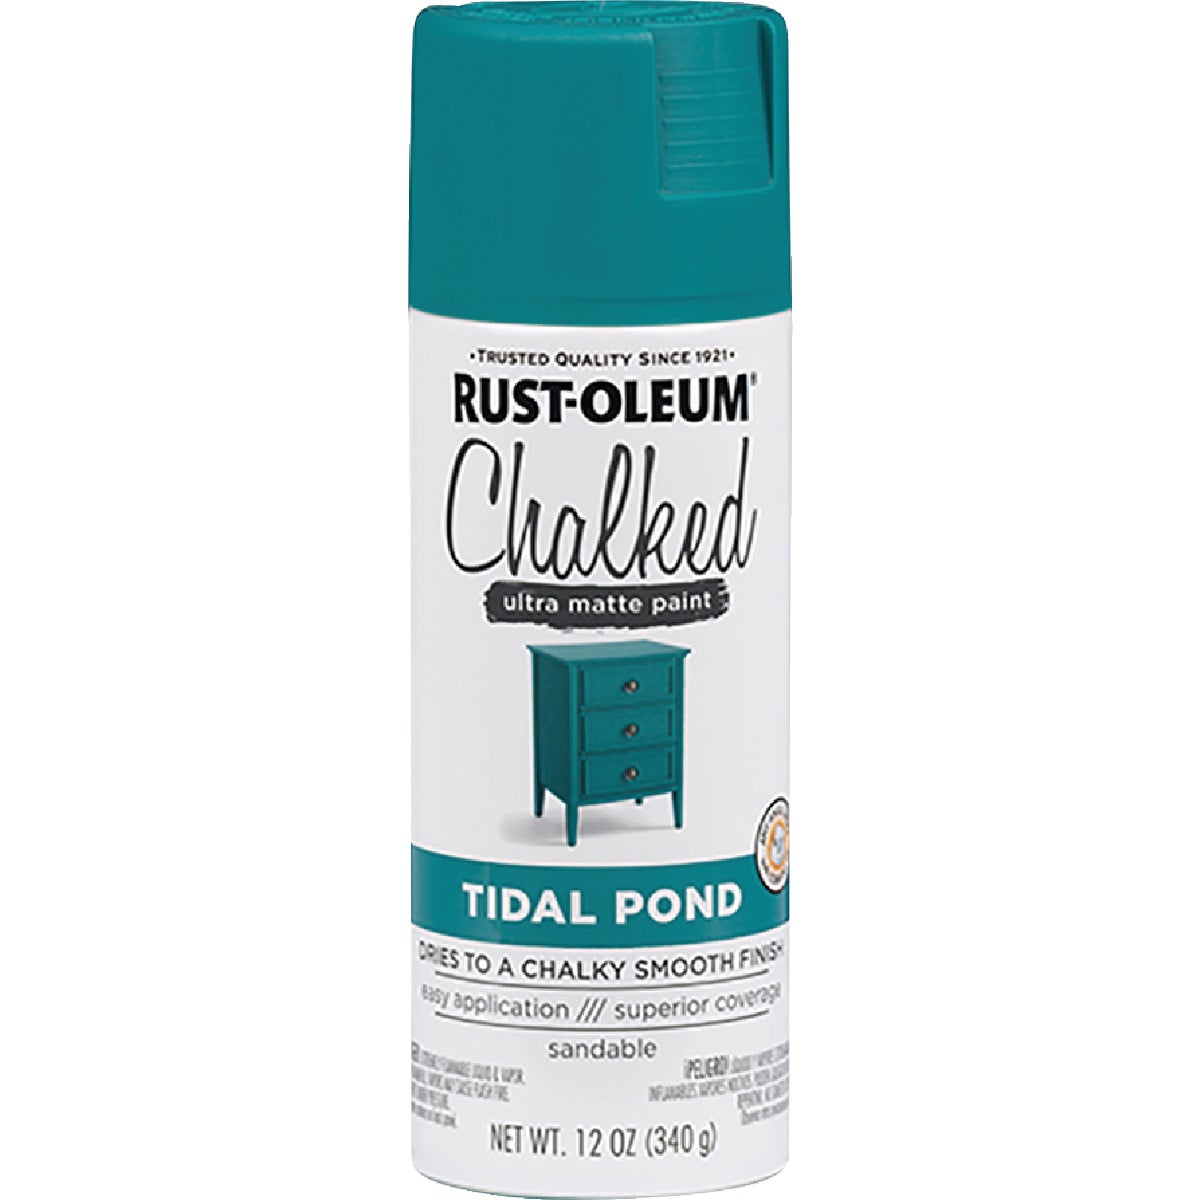 Rust-Oleum Chalked 12 Oz. Ultra Matte Spray Paint, Tidal Pond